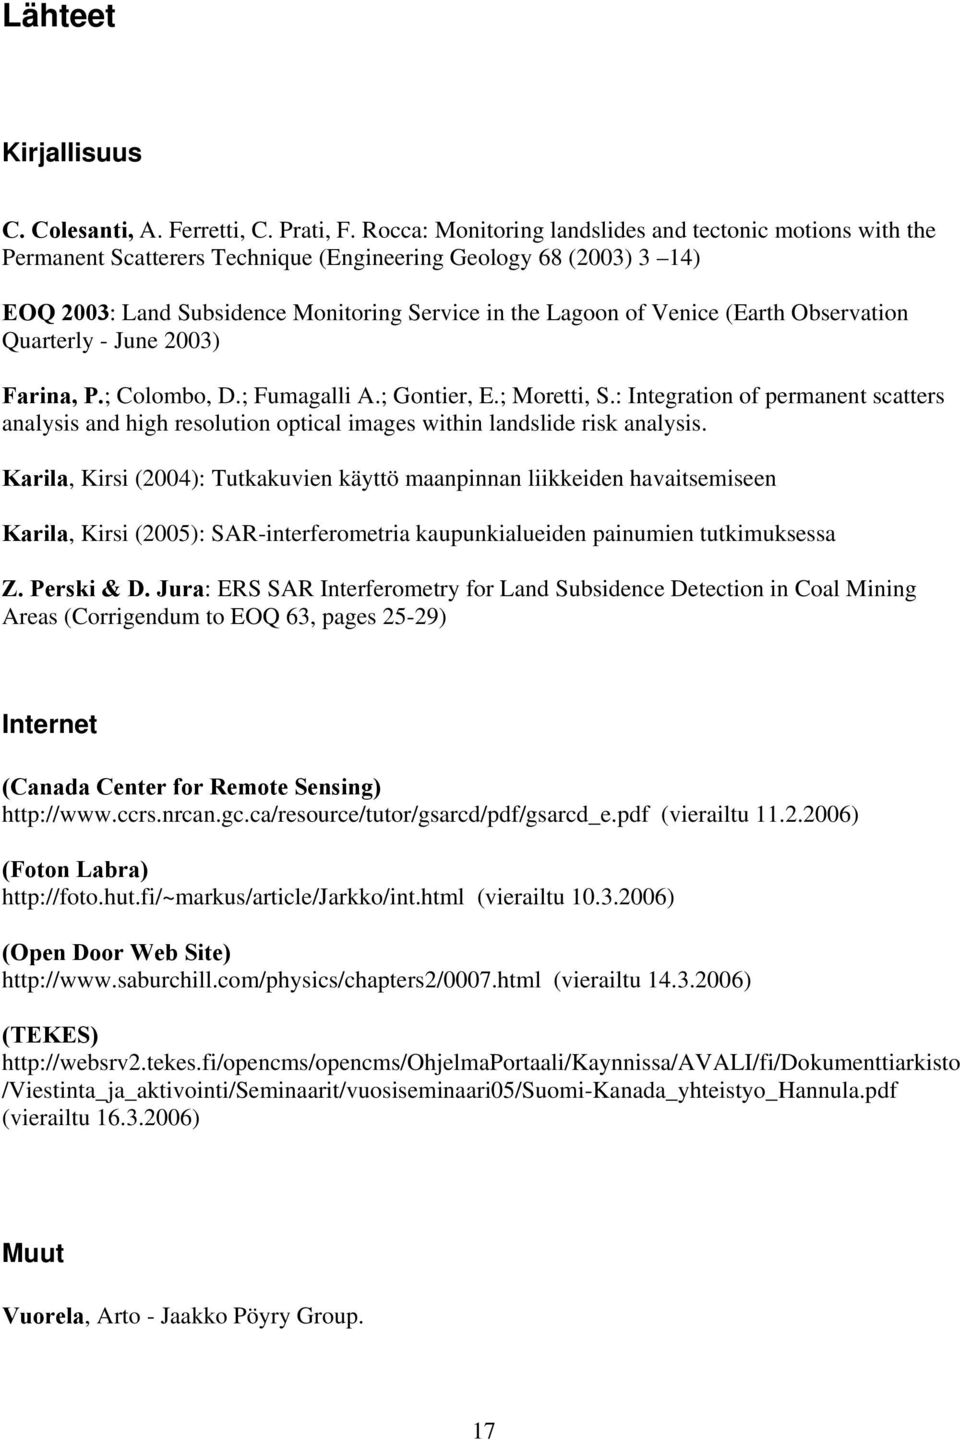 (Earth Observation Quarterly - June 2003) Farina, P.; Colombo, D.; Fumagalli A.; Gontier, E.; Moretti, S.